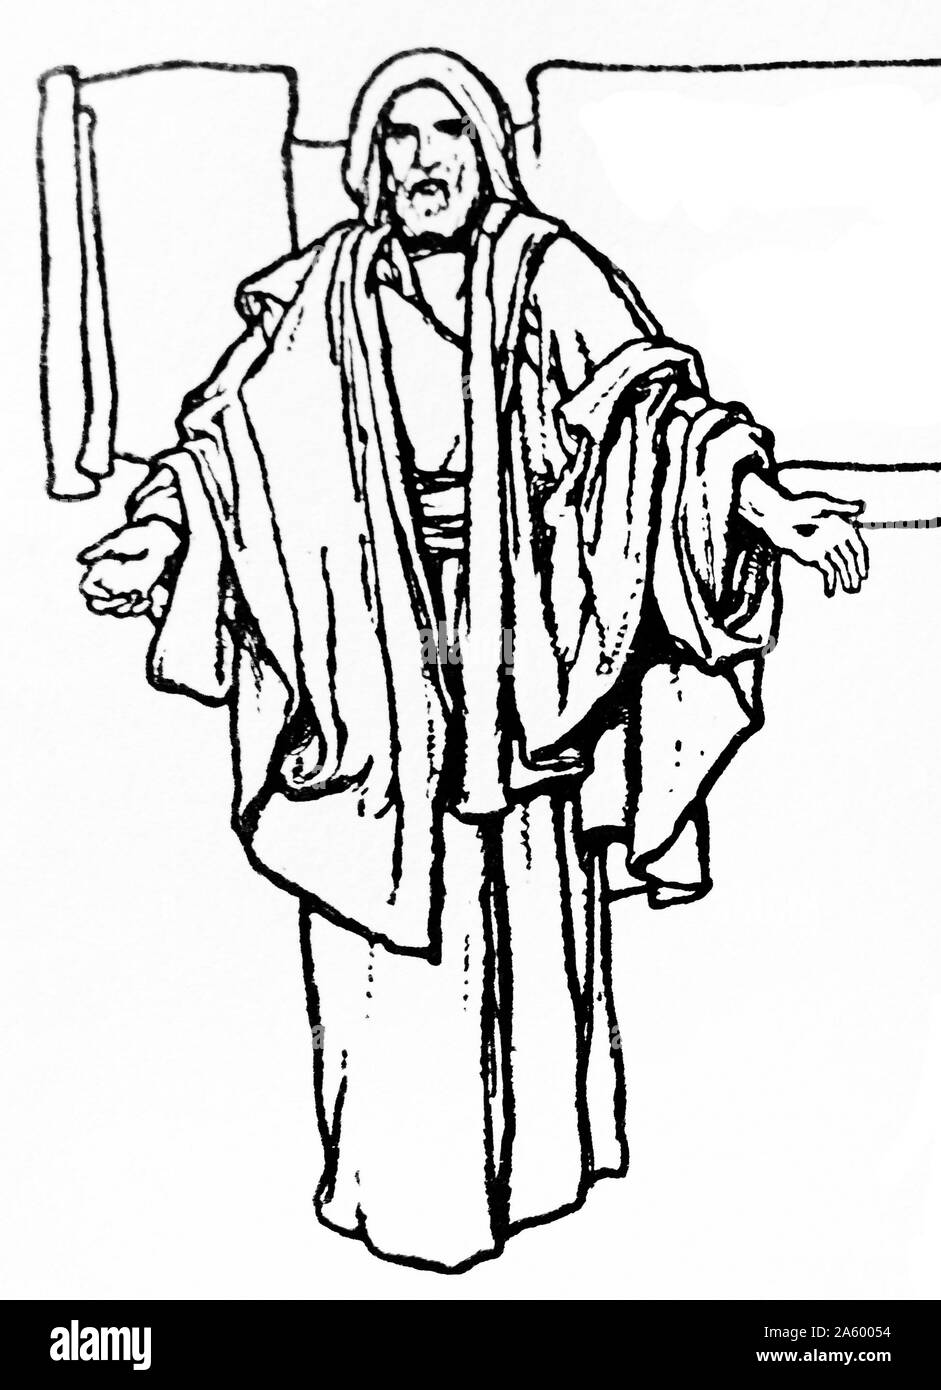 Engraving depicting Jesus Christ 'The Saviour of the World' Stock Photo